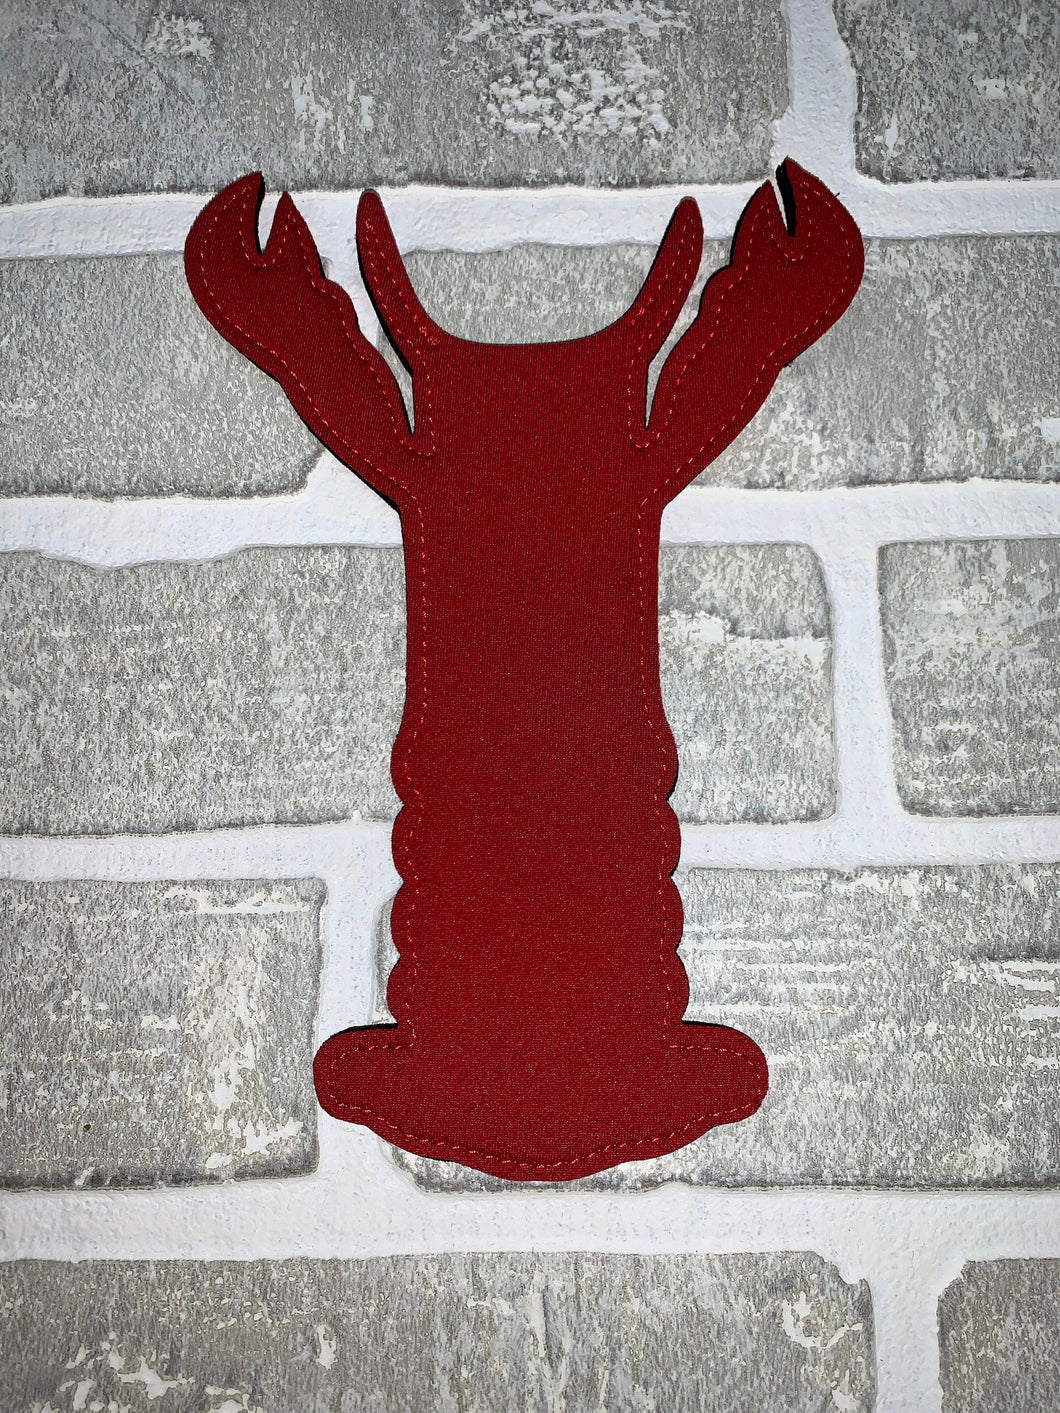 Red lobster popsicle holder blanks